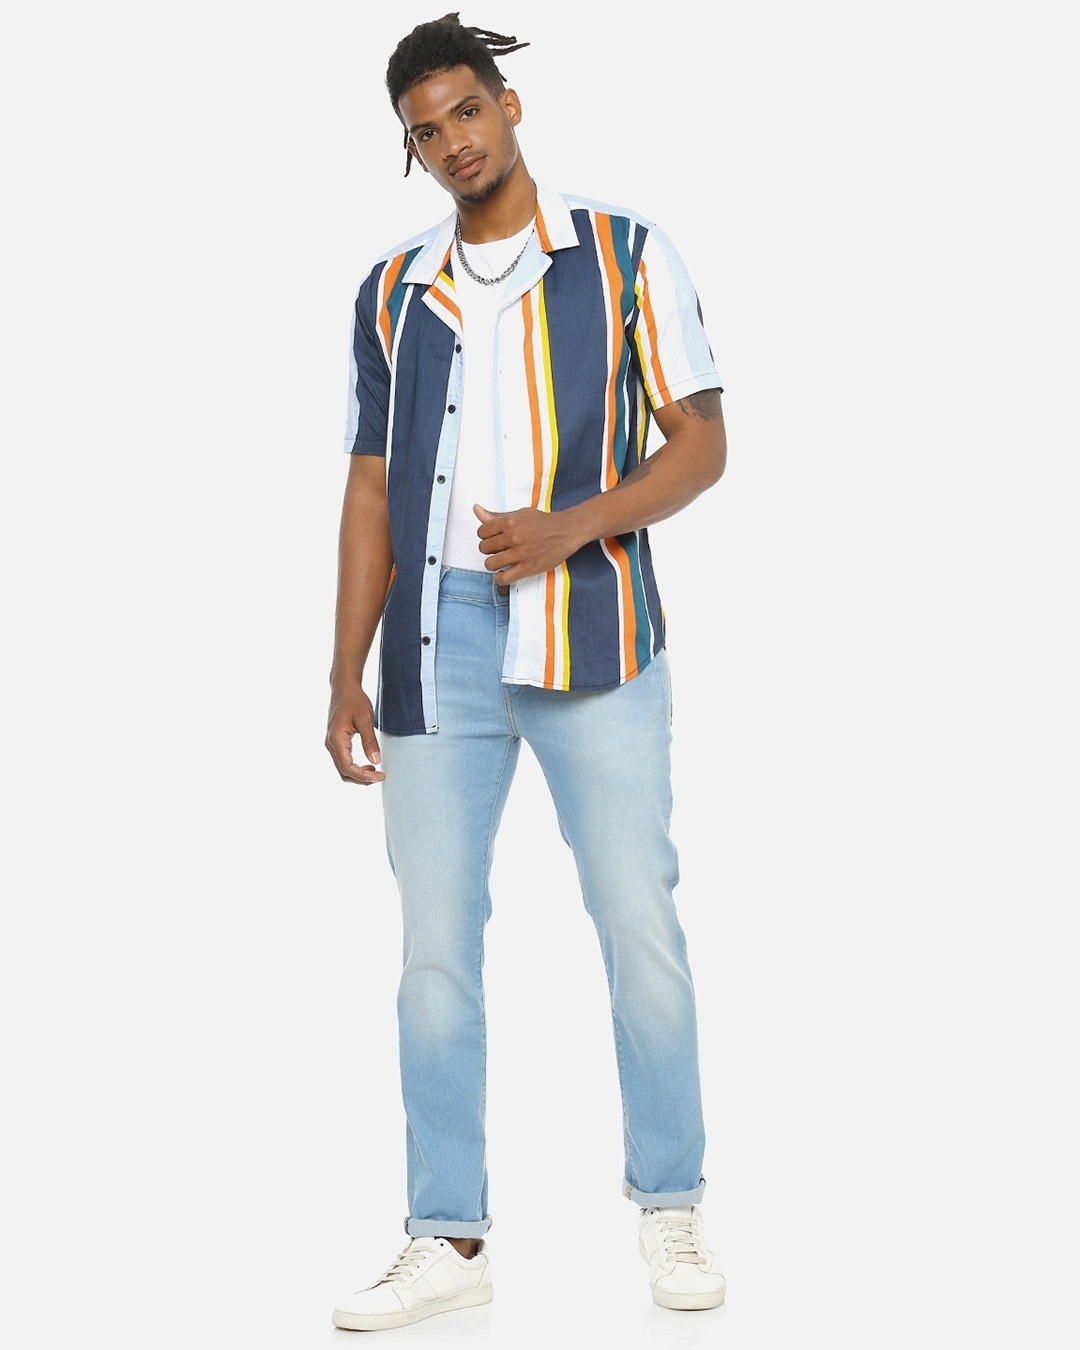 Shop Men's Stylish Casual Shirt-Full